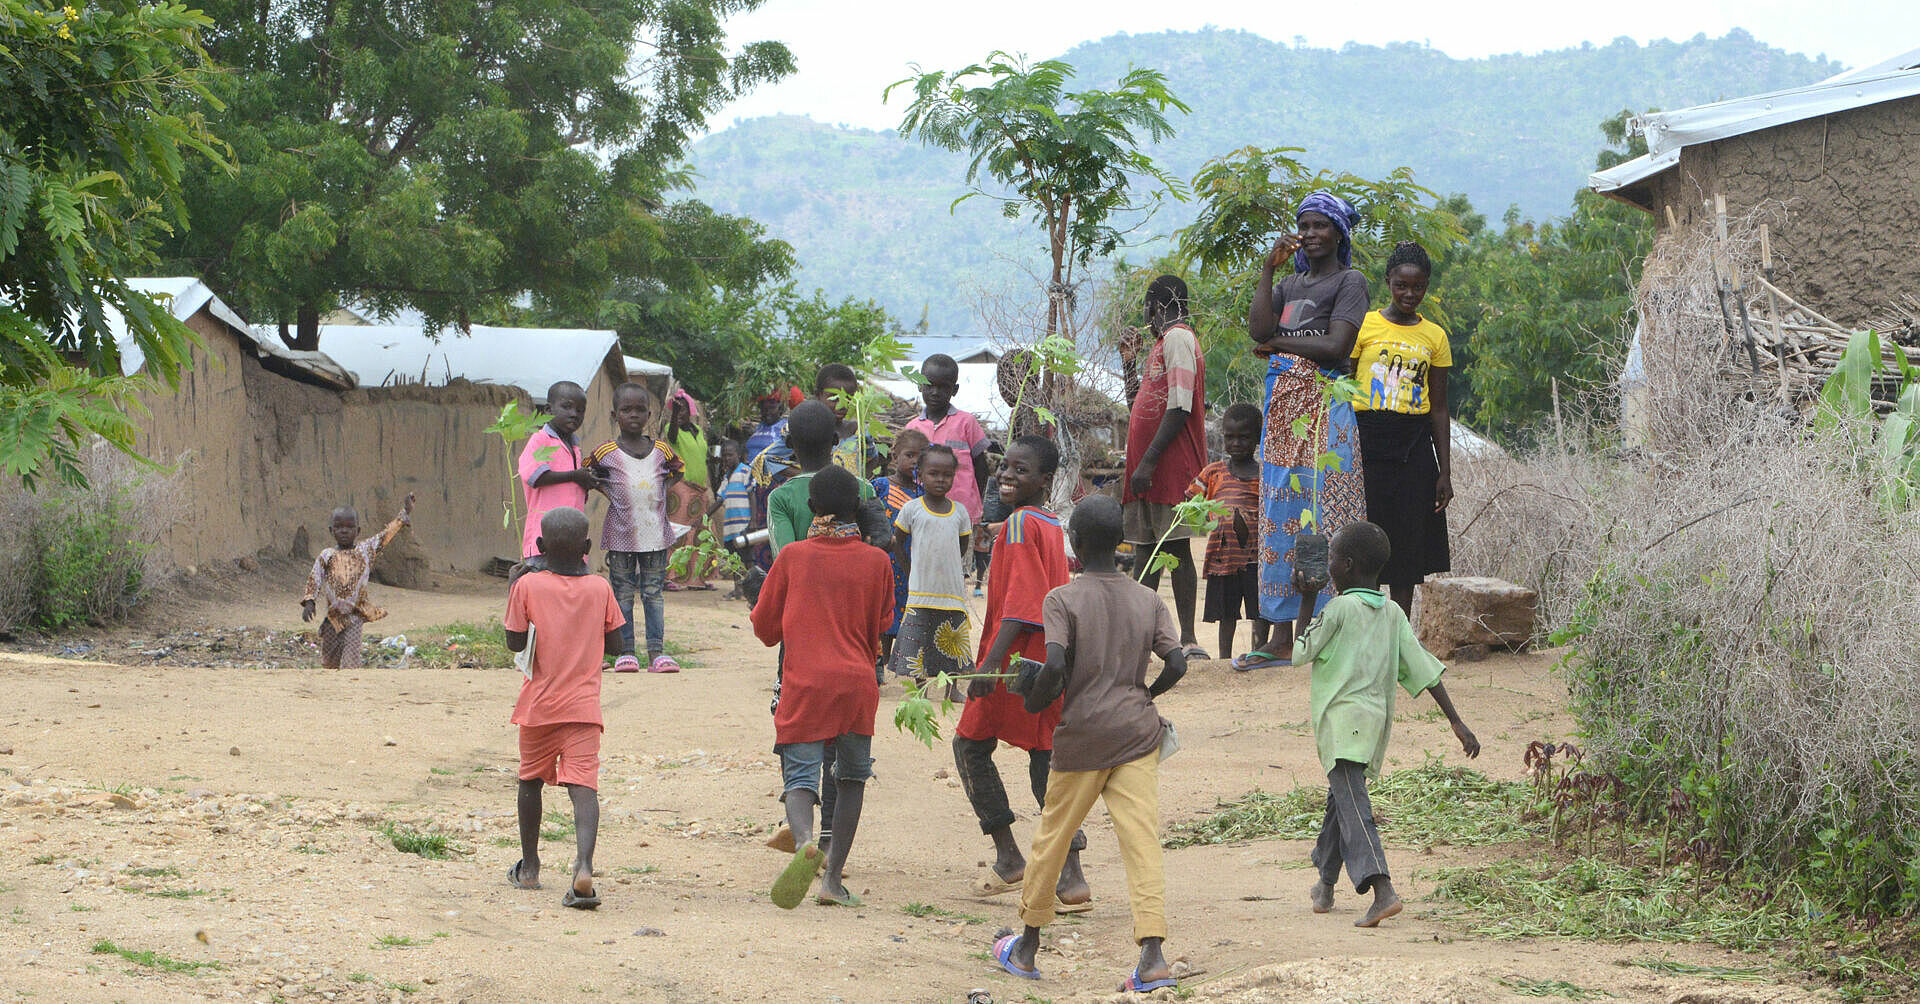 Kindermenge in kamerunischem Dorf Kamerun_RF1157194.jpg